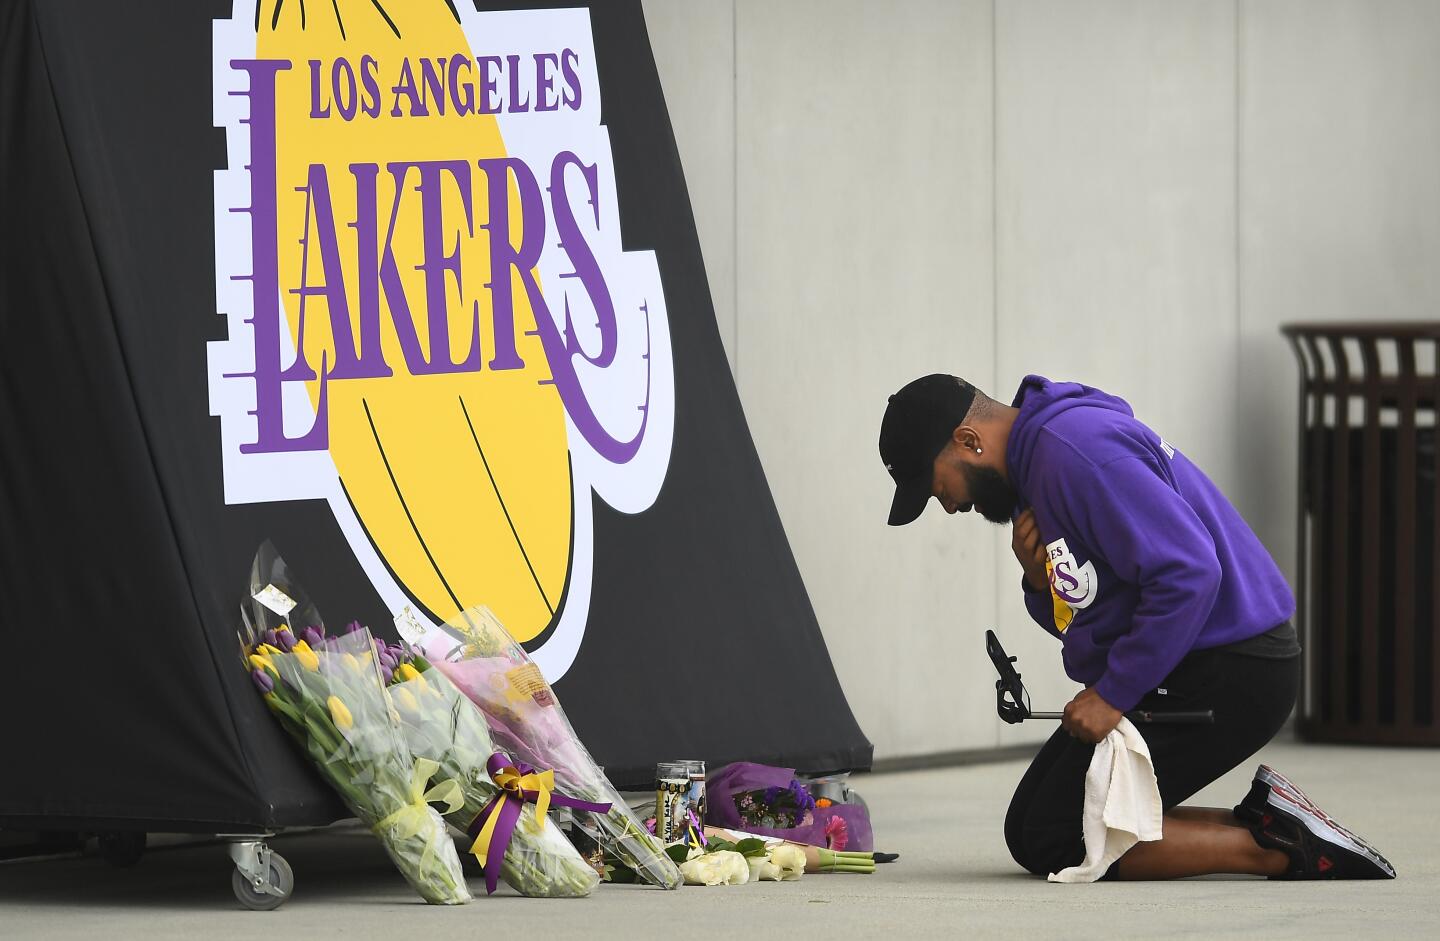 Photos Show Kobe Bryant Memorial, Fan Tributes at LA's Staples Center